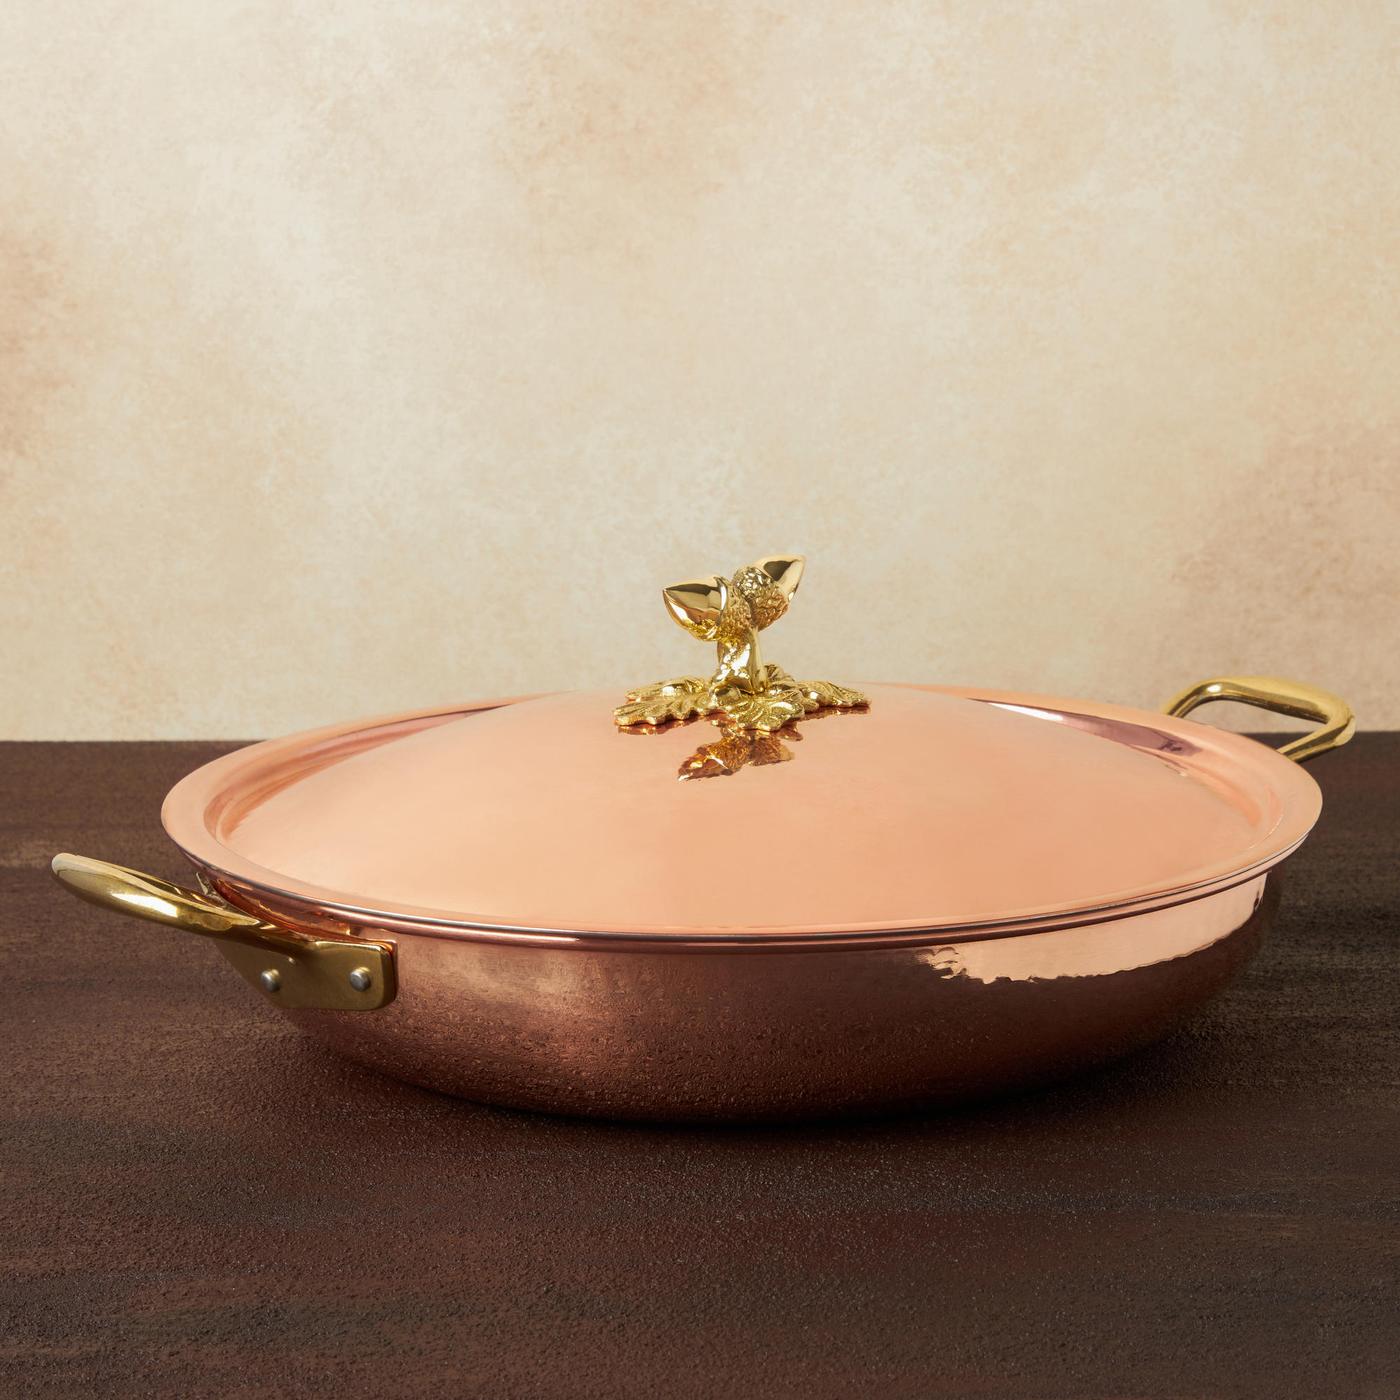 Ruffoni Historia Decor Copper Serving Frypan, Multiple Sizes